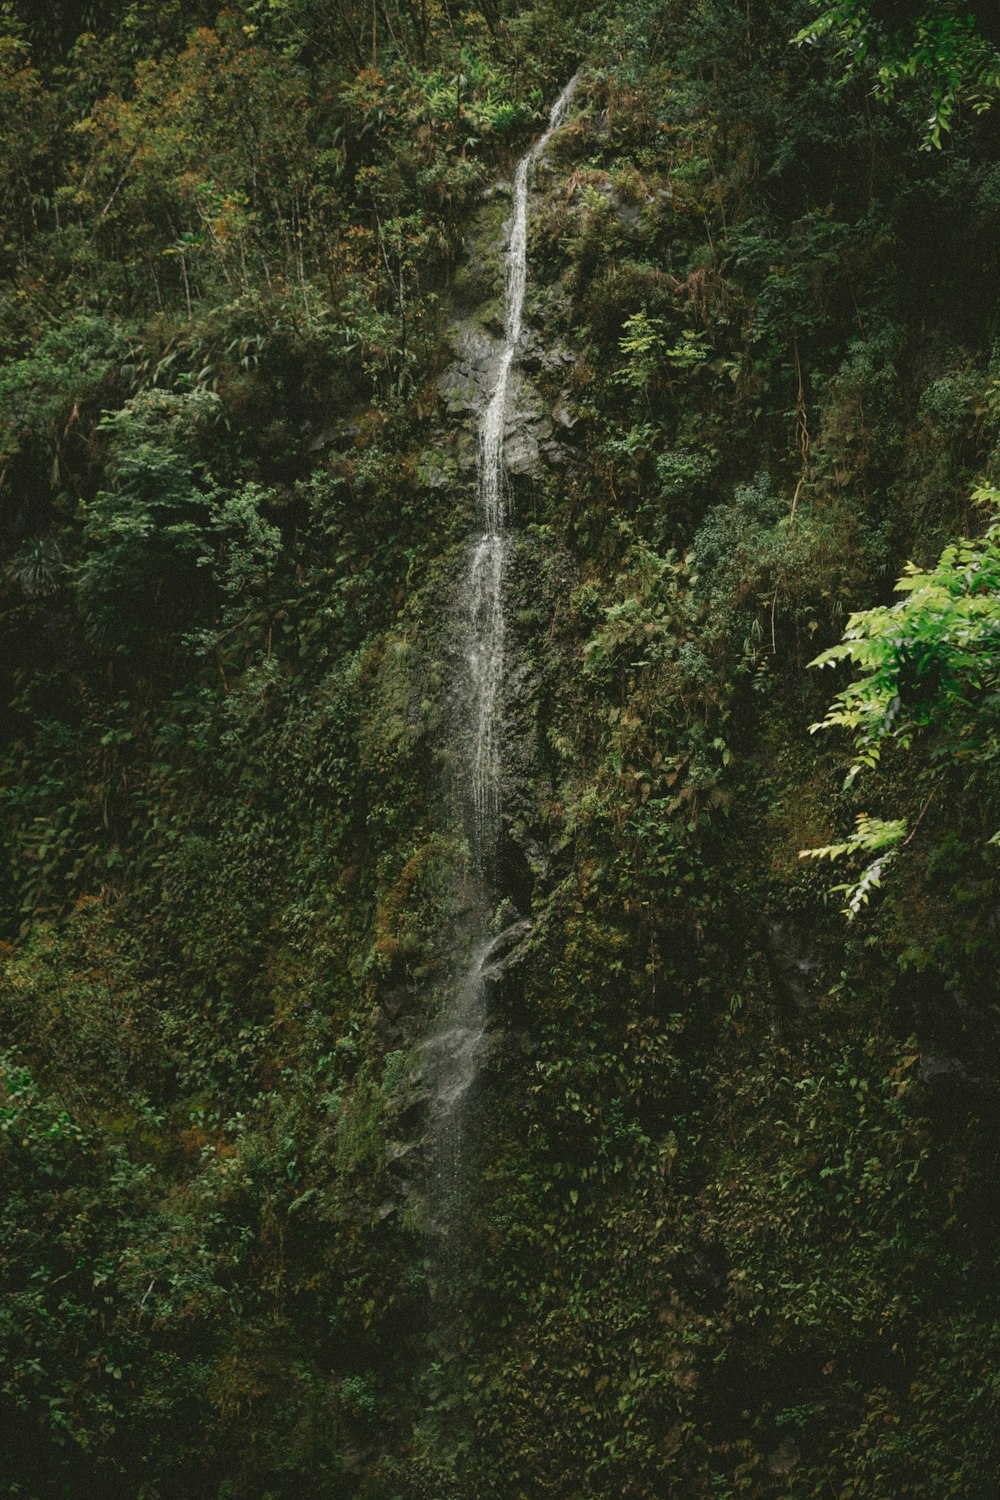 waterfall at daytime